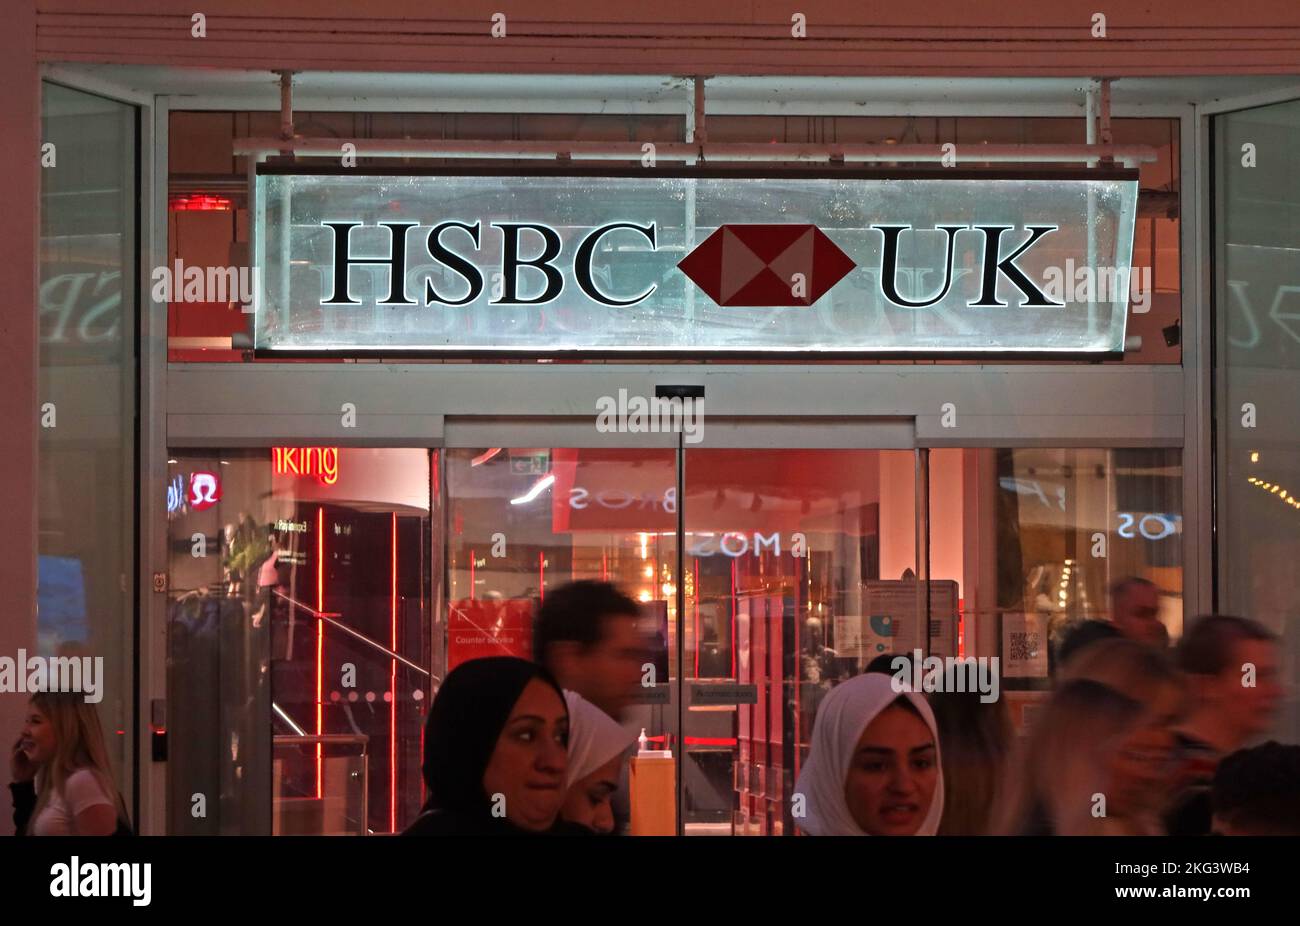 HSBC - Hong Kong Shanghai Banking Corporation UK branch, 2-4 St Anns Square, Manchester, England, UK, M2 7HD at night Stock Photo